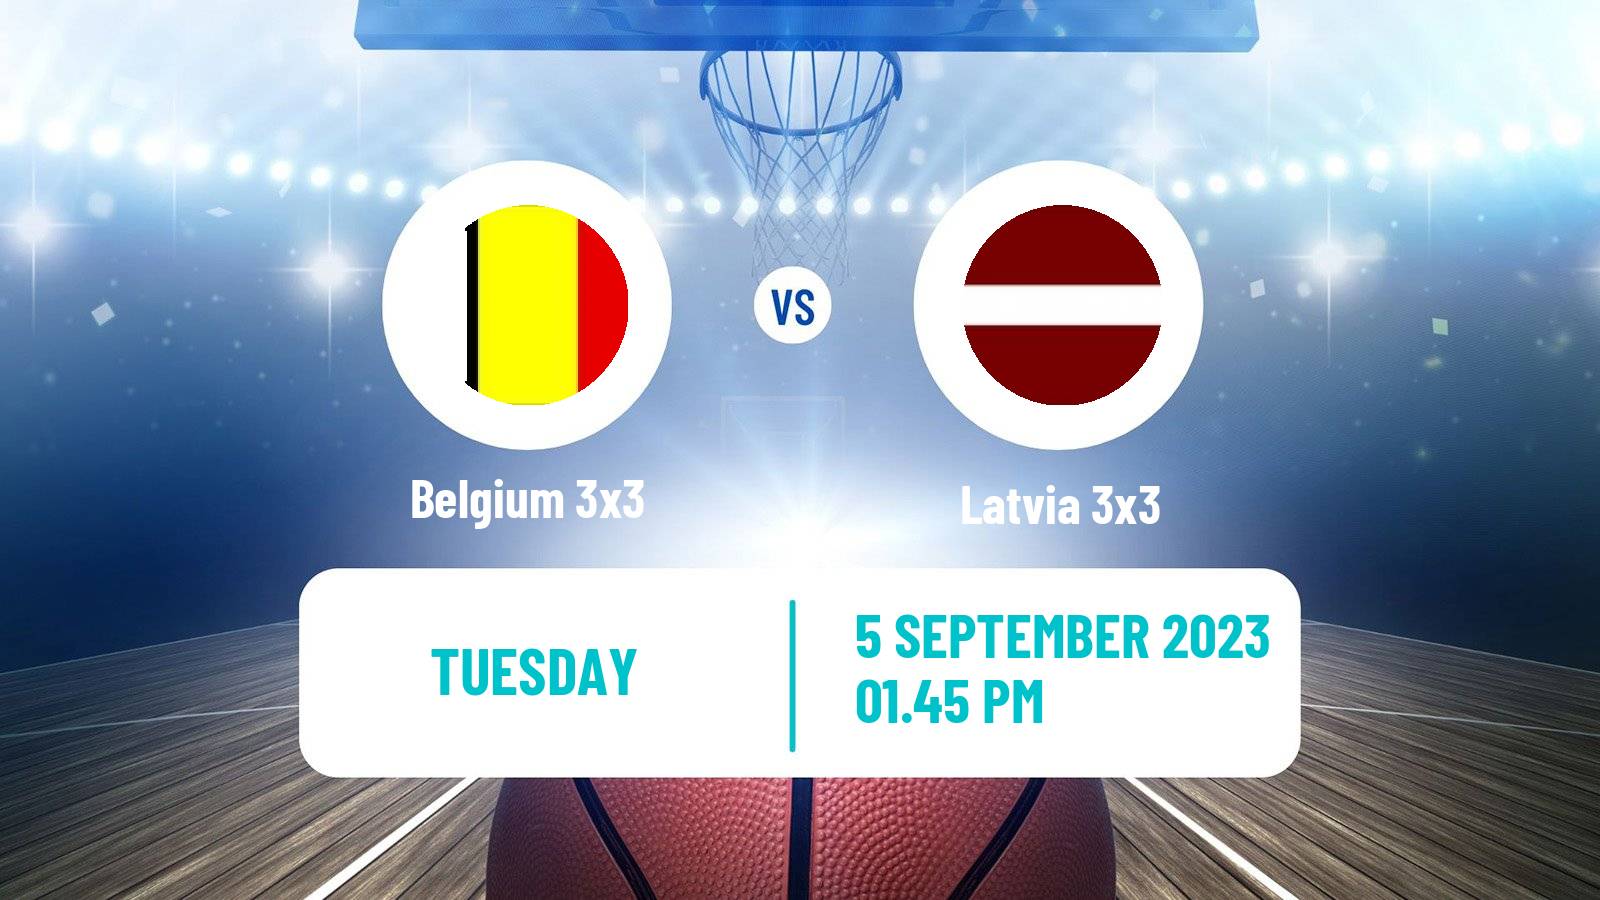 Basketball Europe Cup Basketball 3x3 Belgium 3x3 - Latvia 3x3